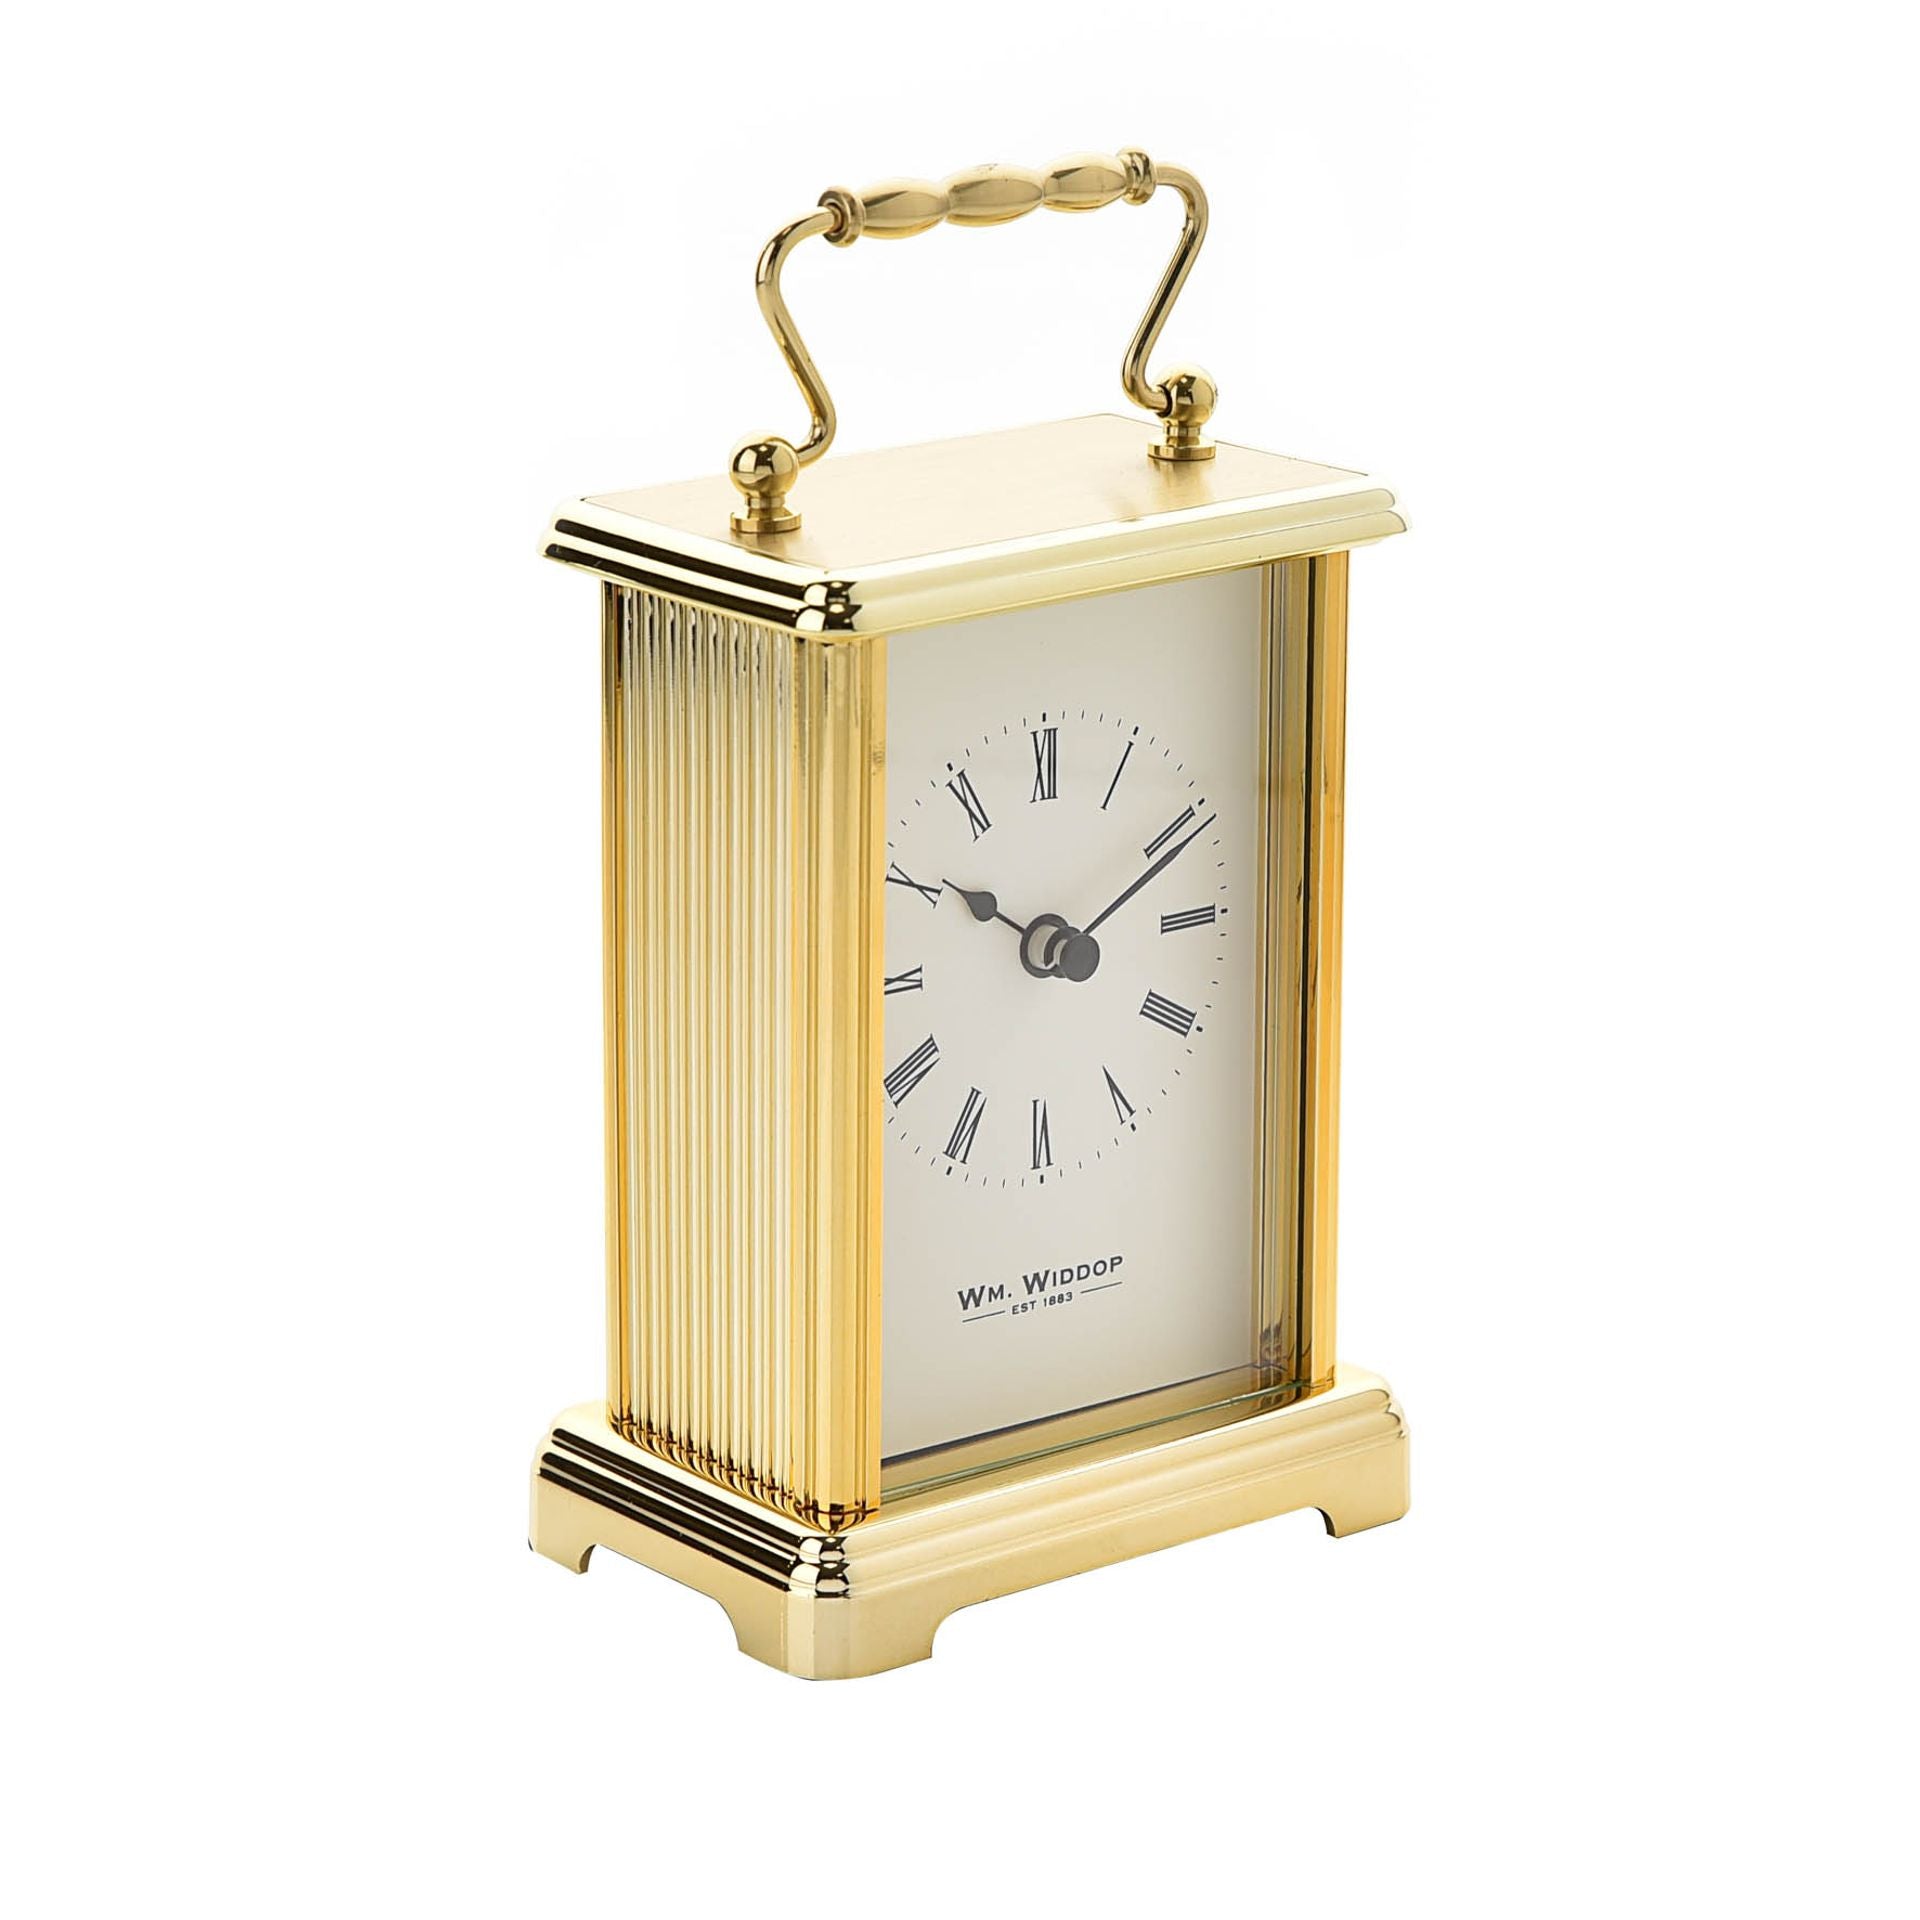 WM. Widdop Rectangular 2 Tone Gold Carriage Clock